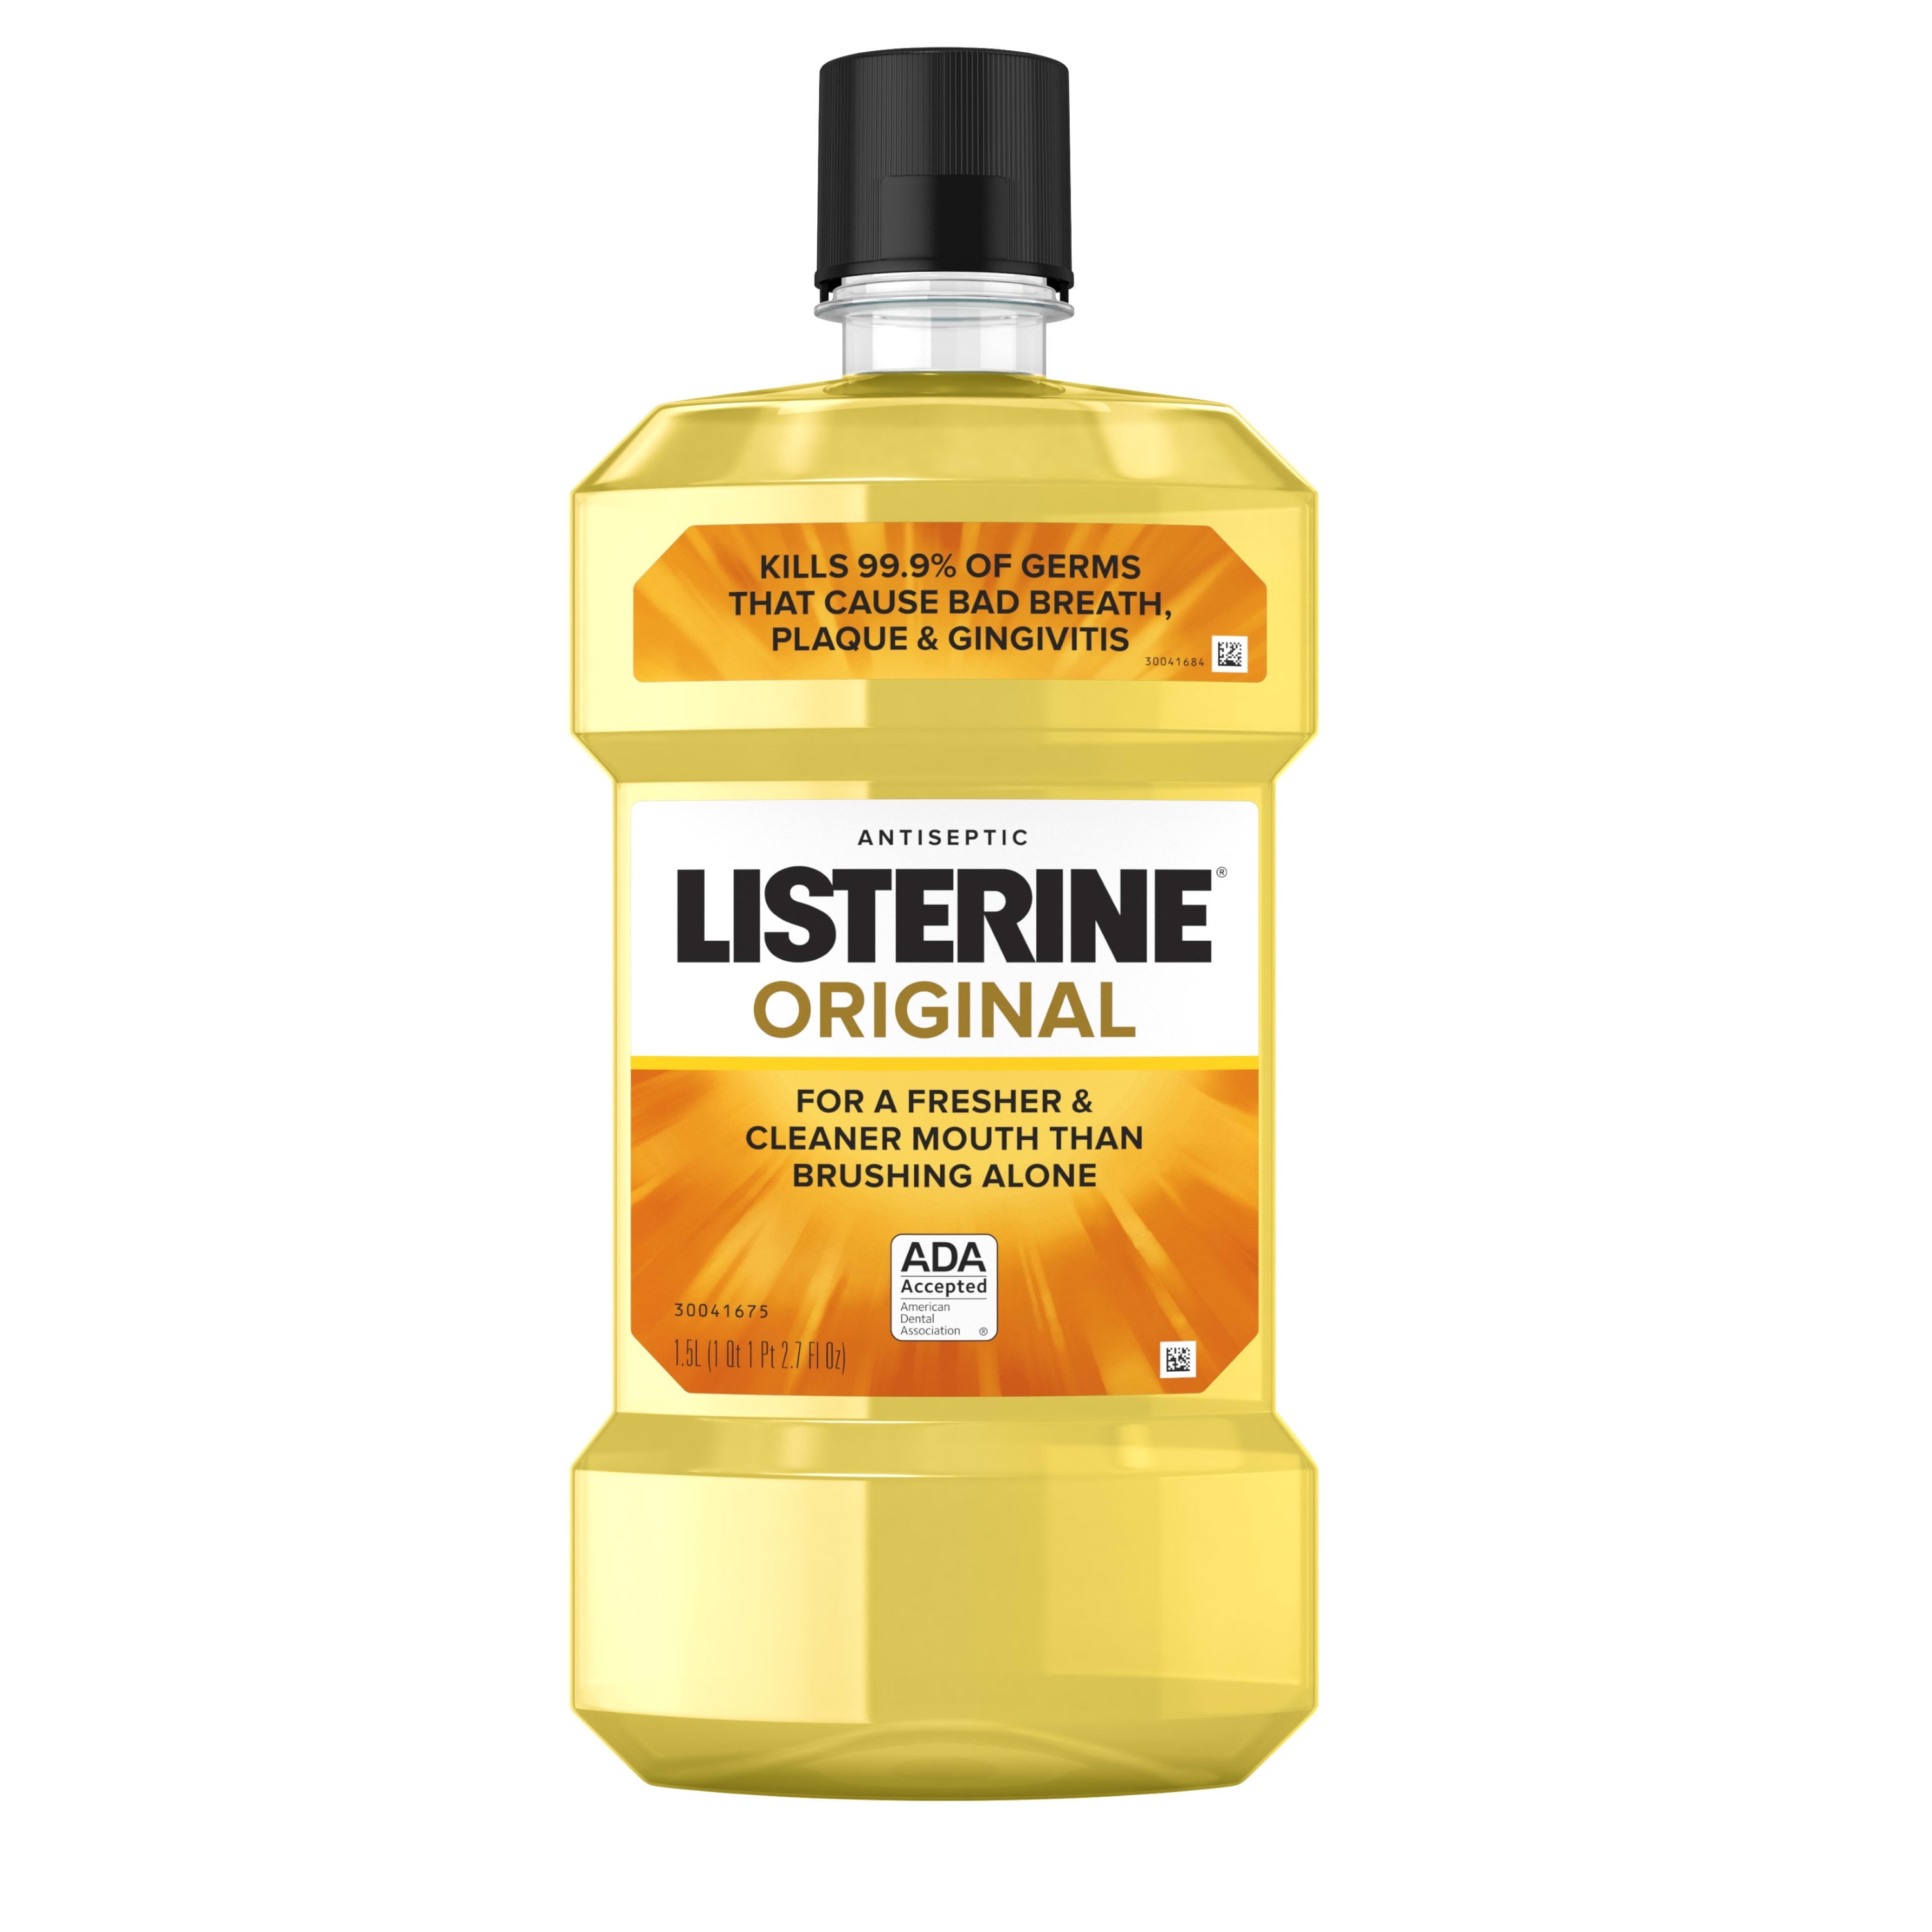 Listerine Original Antiseptic Mouthwash for Bad Breath & Plaque, 1.5 L